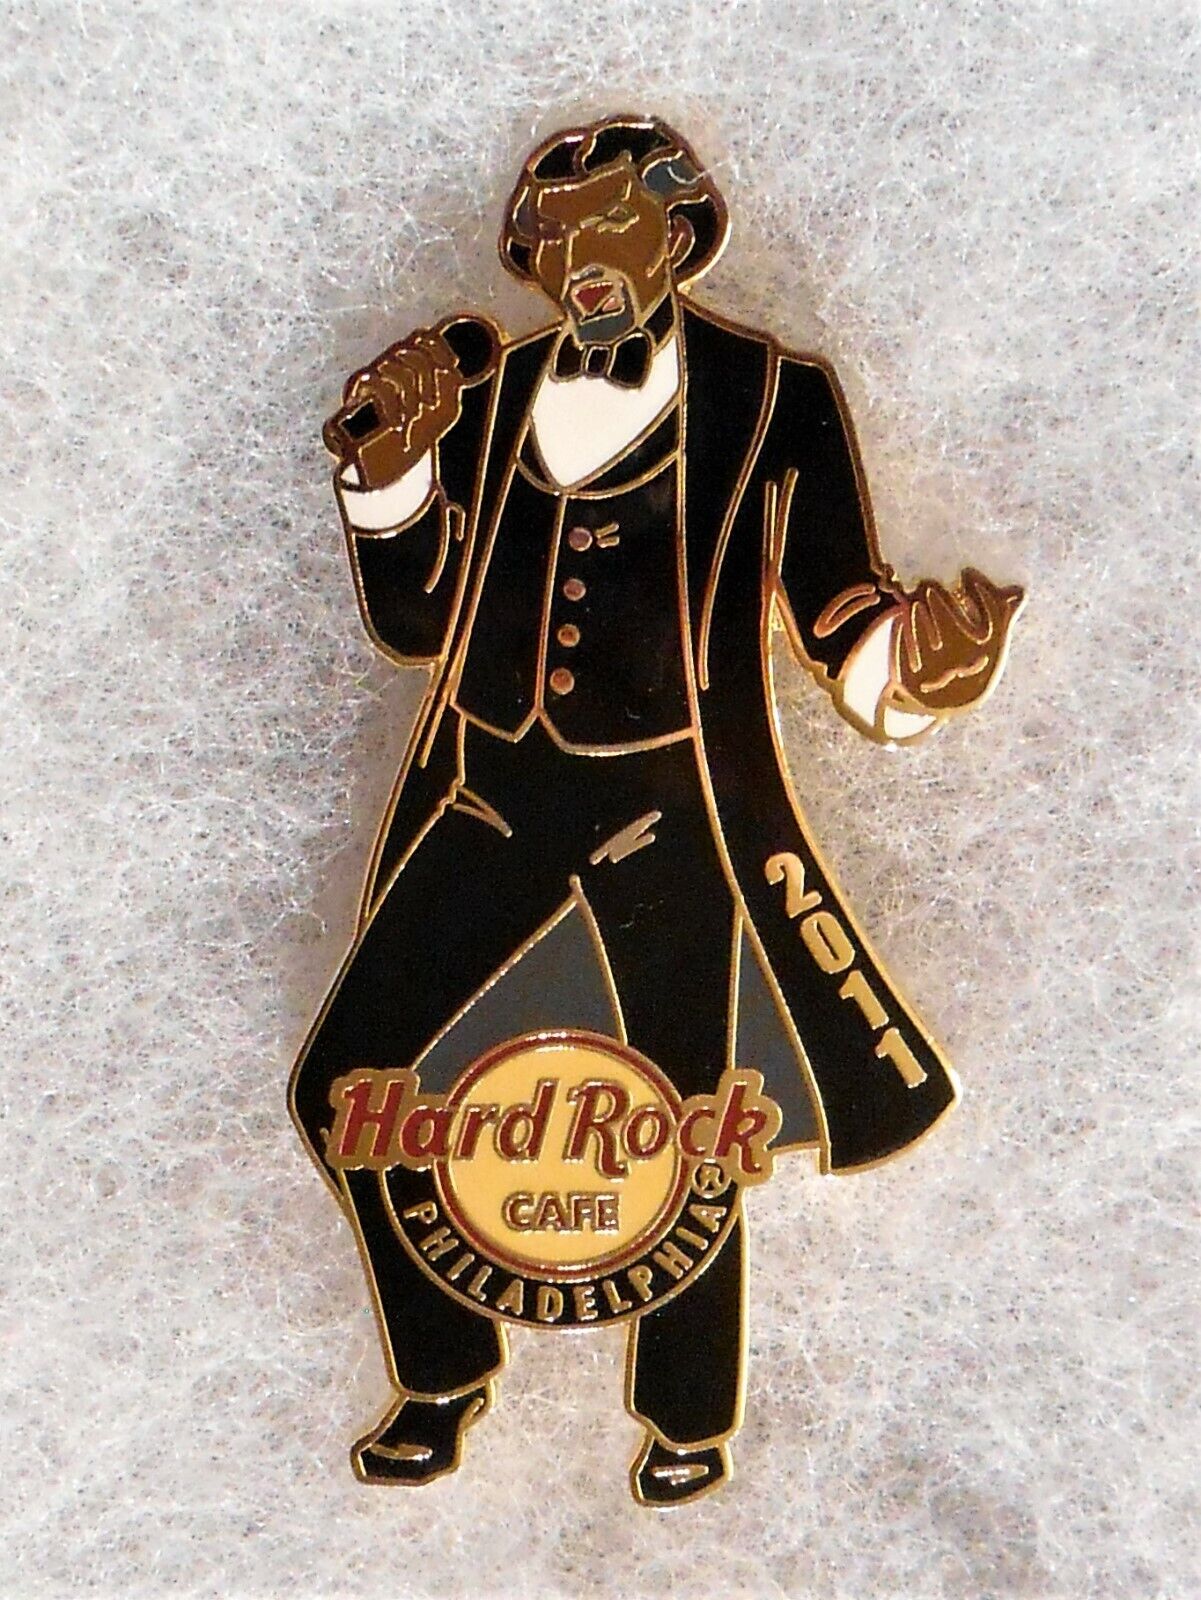 HARD ROCK CAFE PHILADELPHIA HISTORIANS OF ROCK FREDERICK DOUGLASS PIN # 61675